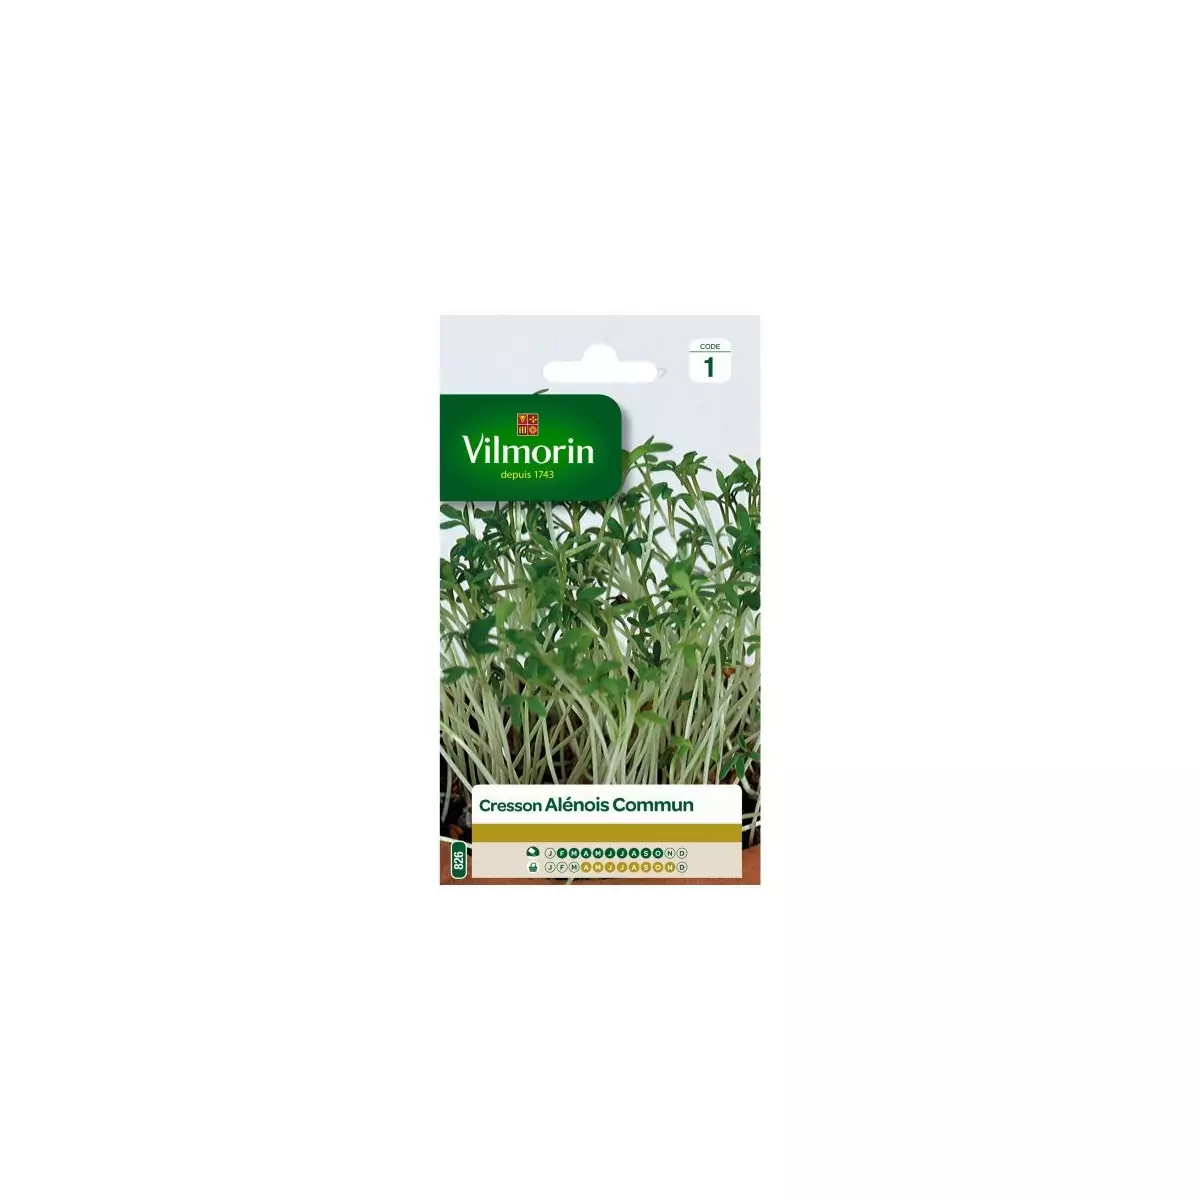 Common alenois watercress seeds bag